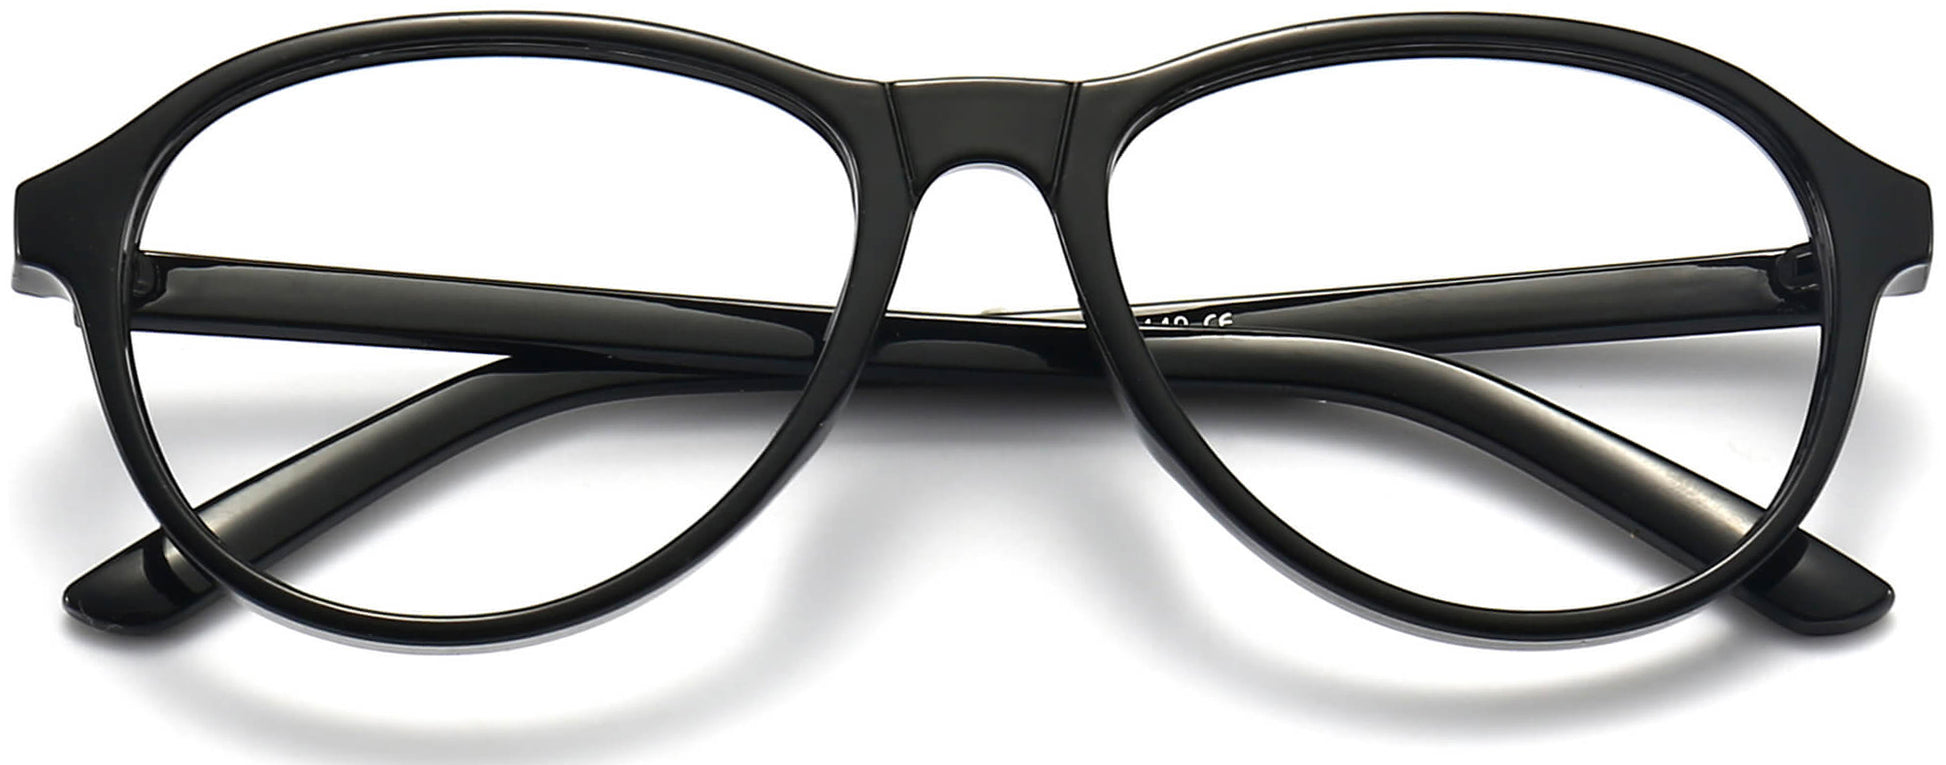 Kylan Aviator Black Eyeglasses from ANRRI, closed view